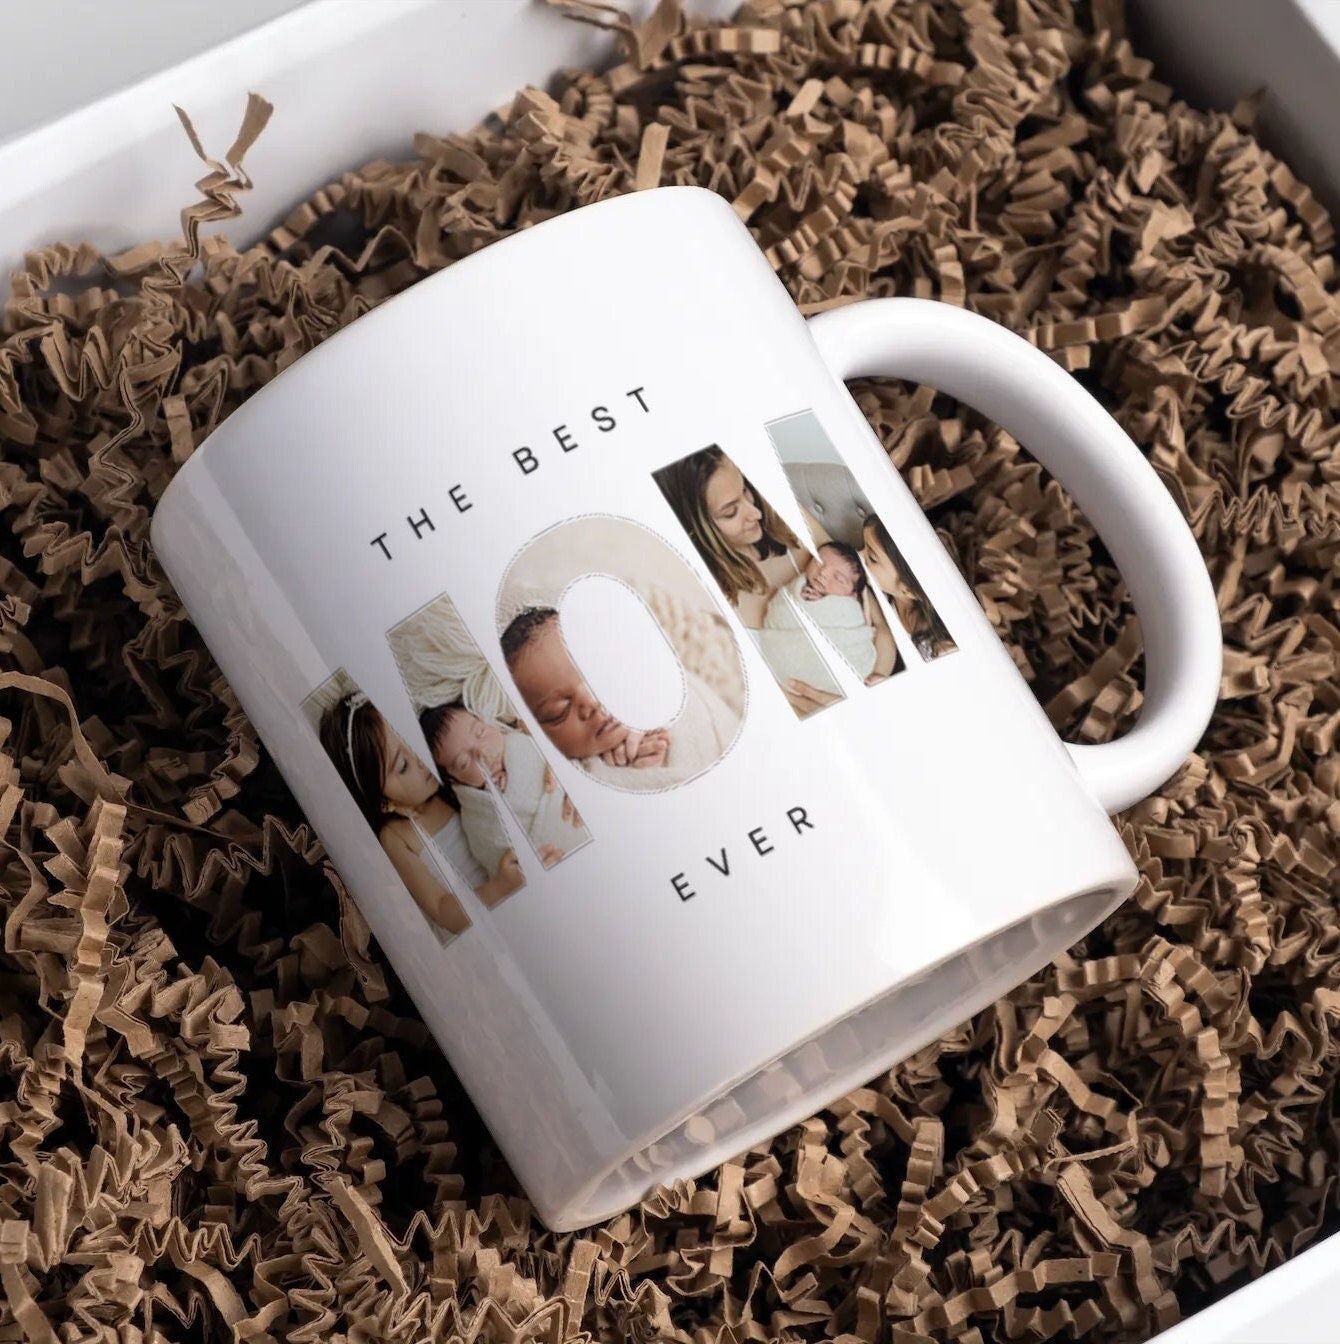 Mothers Day Mug: Personalized Photo Mug, Coffee Mug for Mom, Custom Picture Mug, Personalized Picture Mug, Mug for Mom on Mothers Day